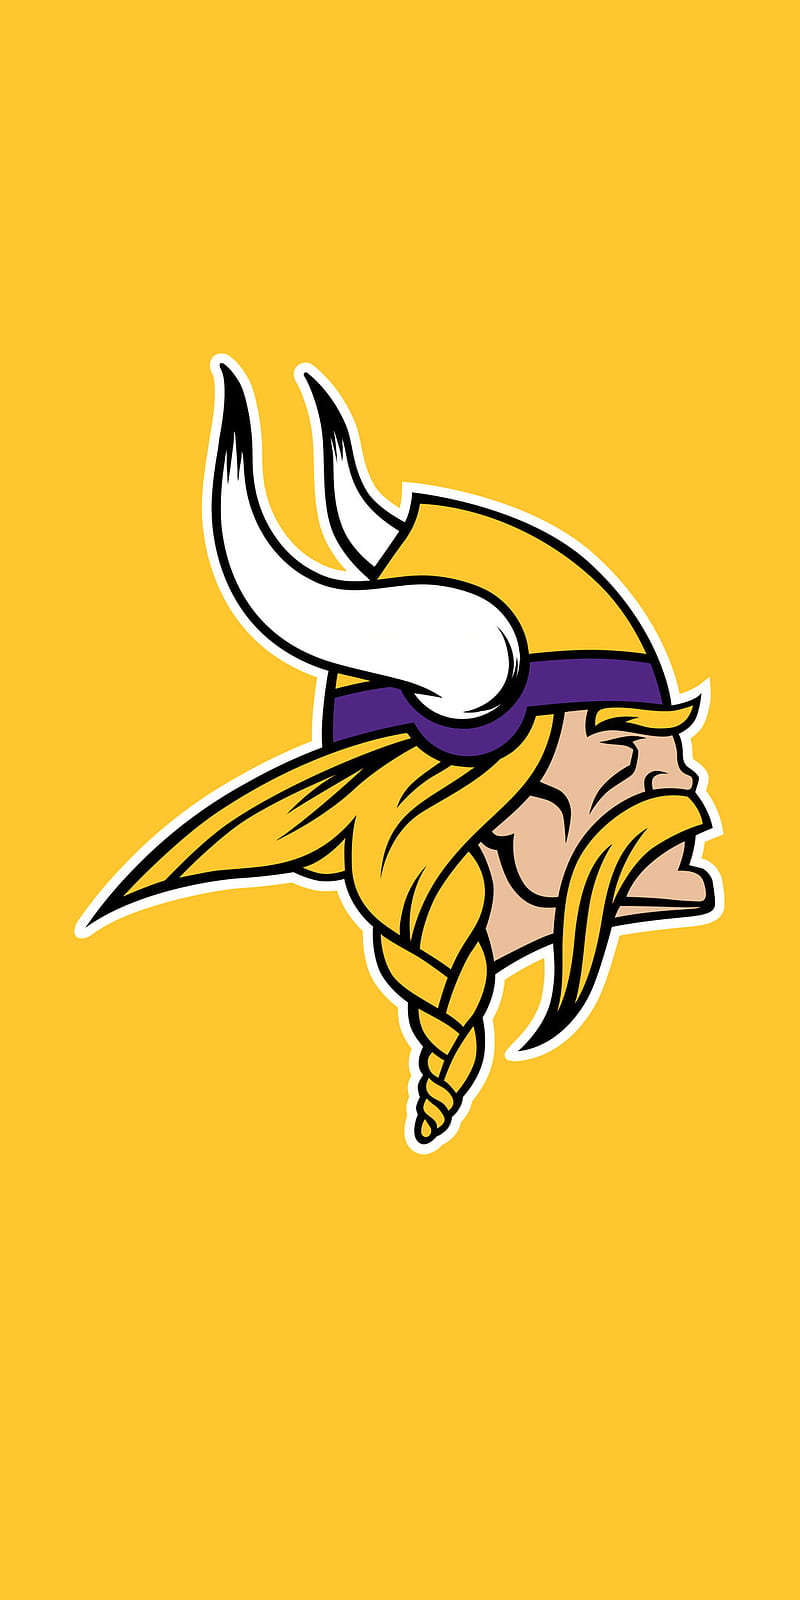 Download Minnesota Vikings NFL Team Logo Wallpaper